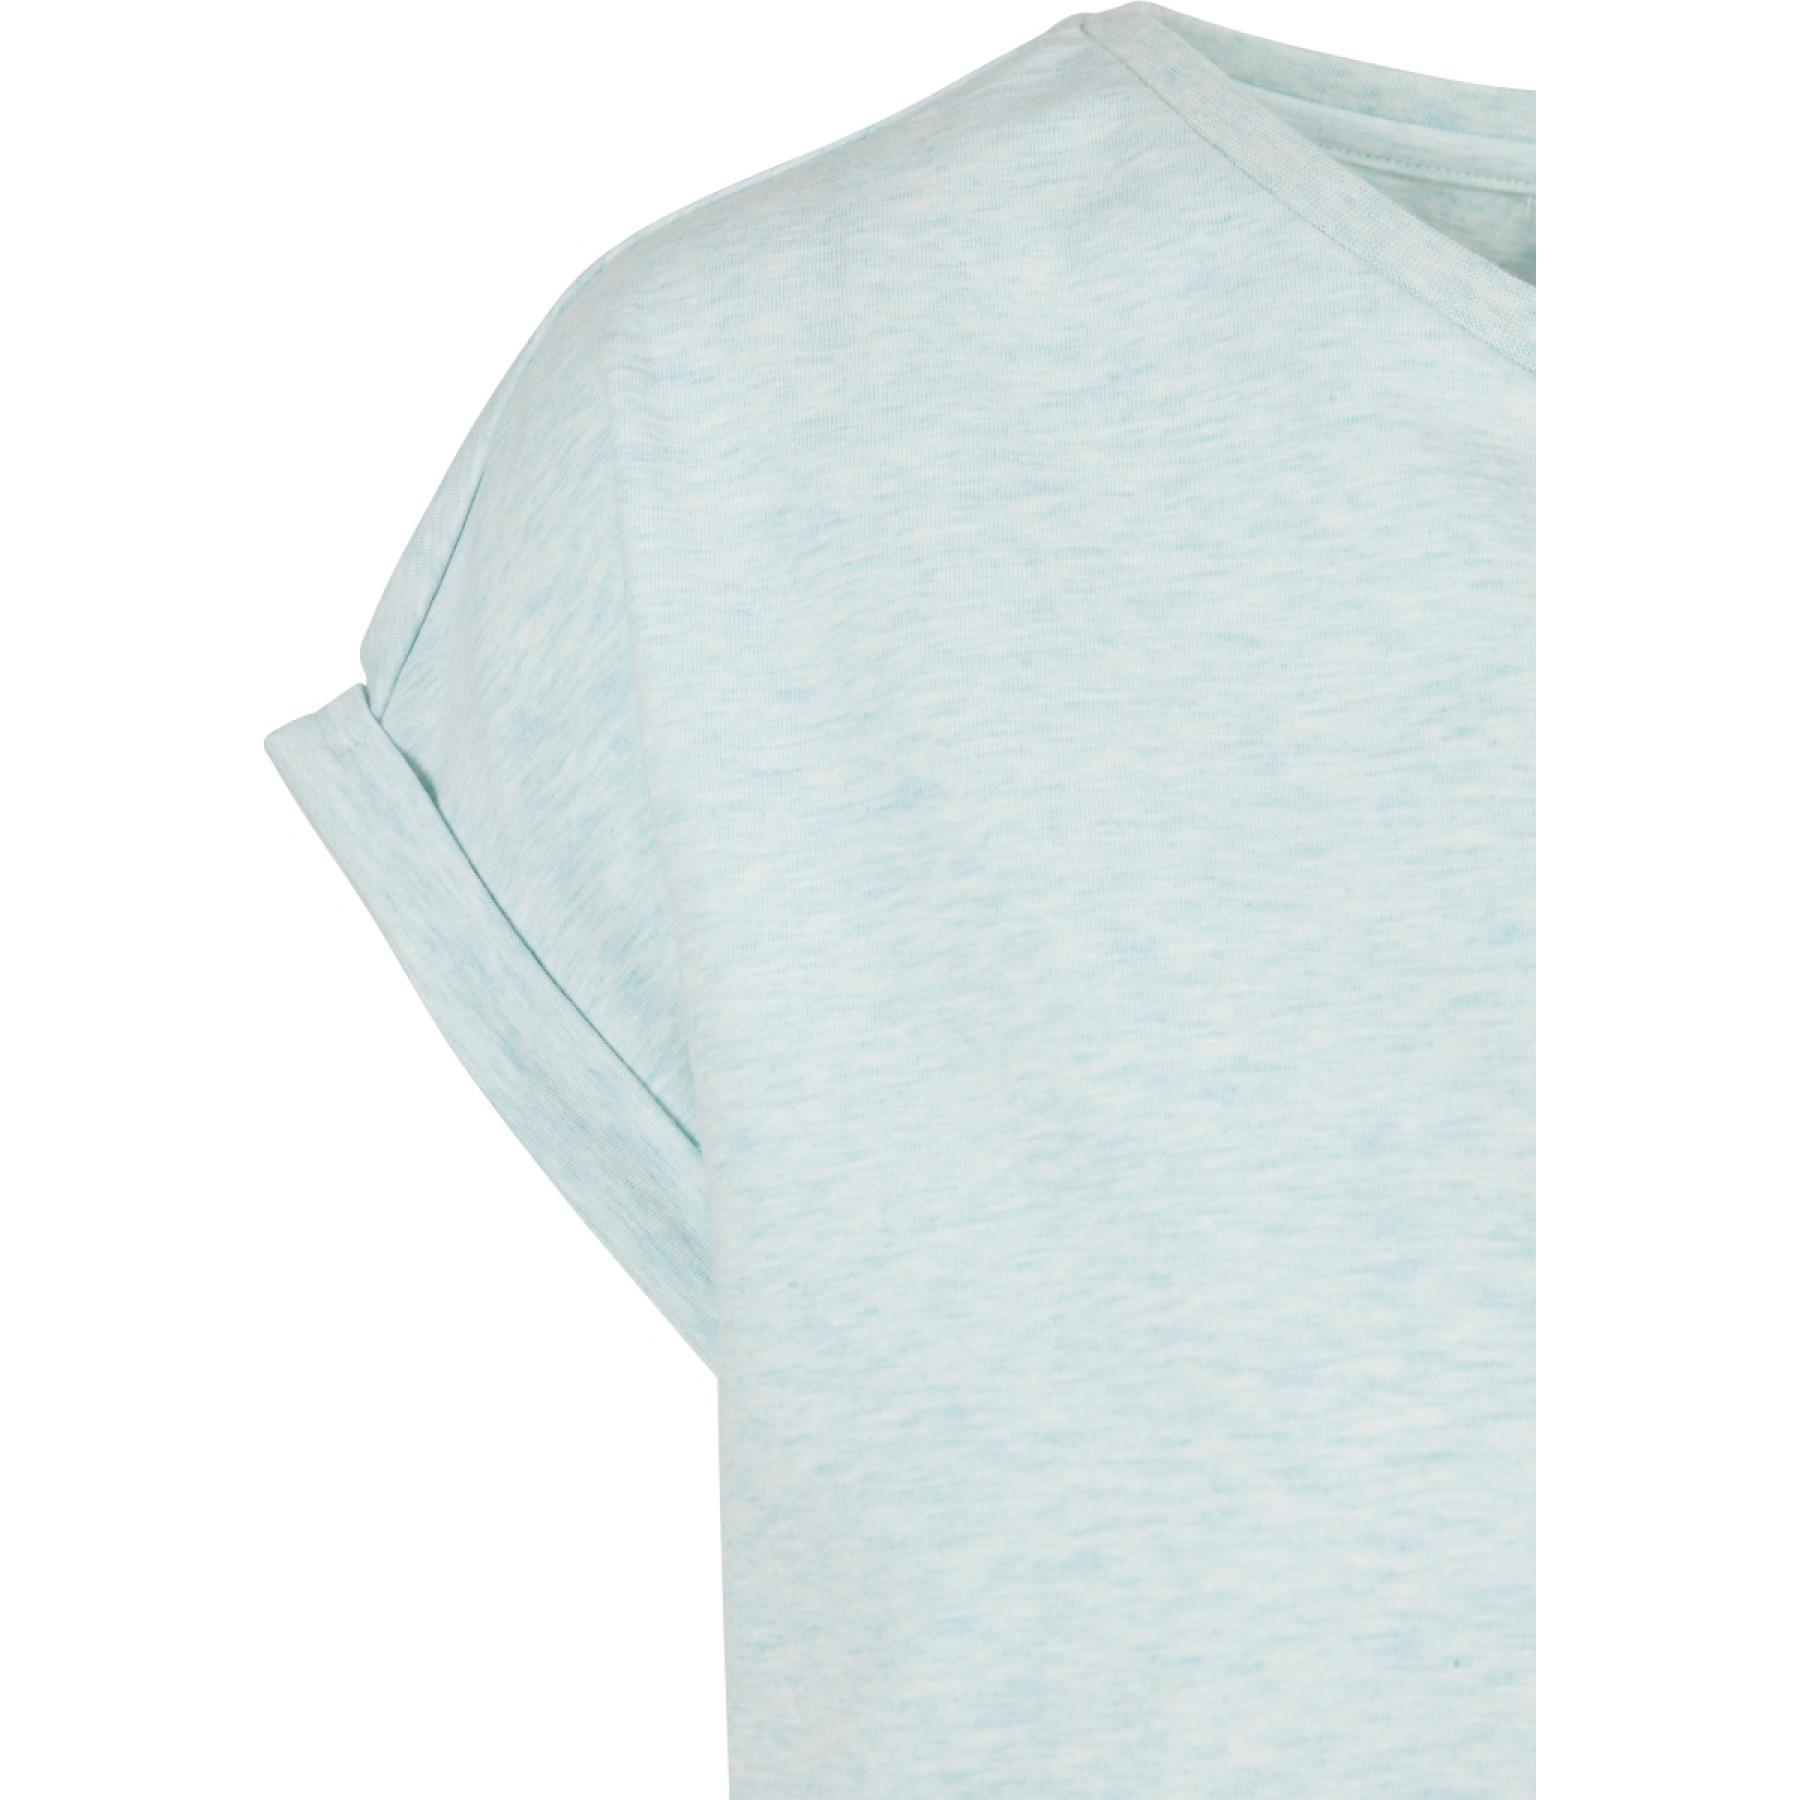 Koszulka damska Urban Classics color melange extended shoulder-Duże rozmiary